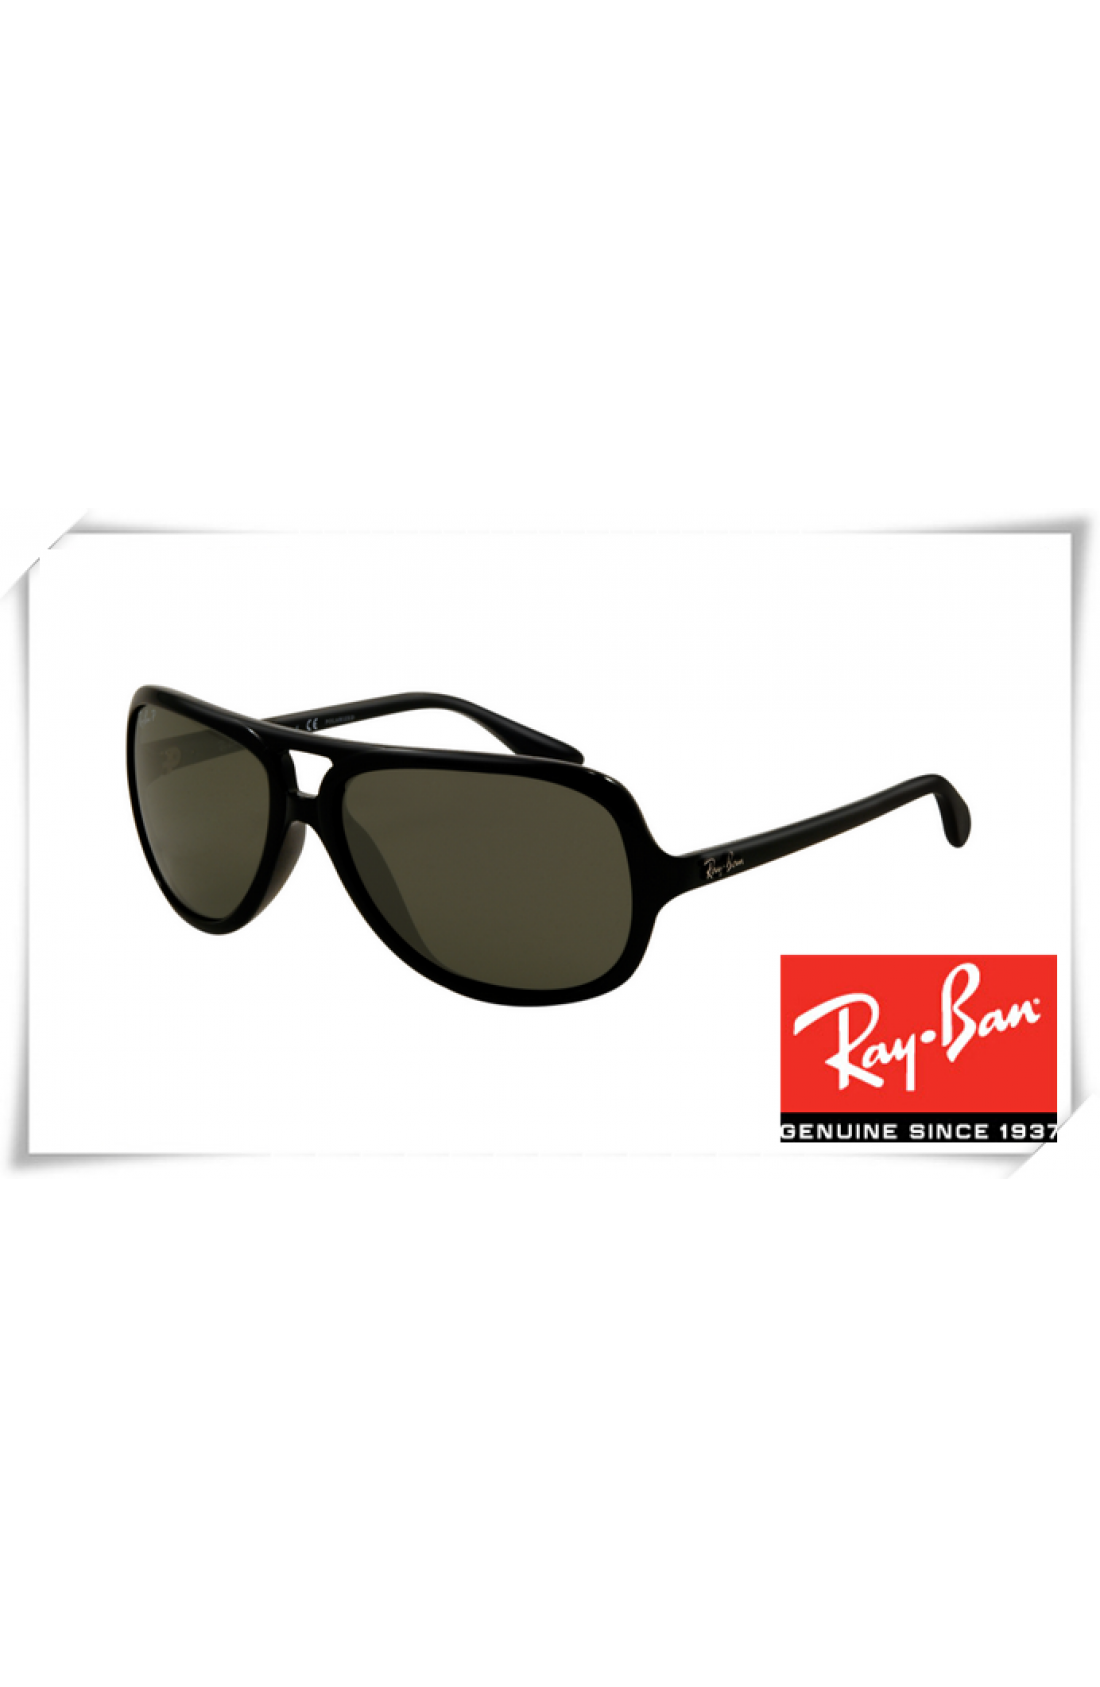 ray ban rb4162 sunglasses